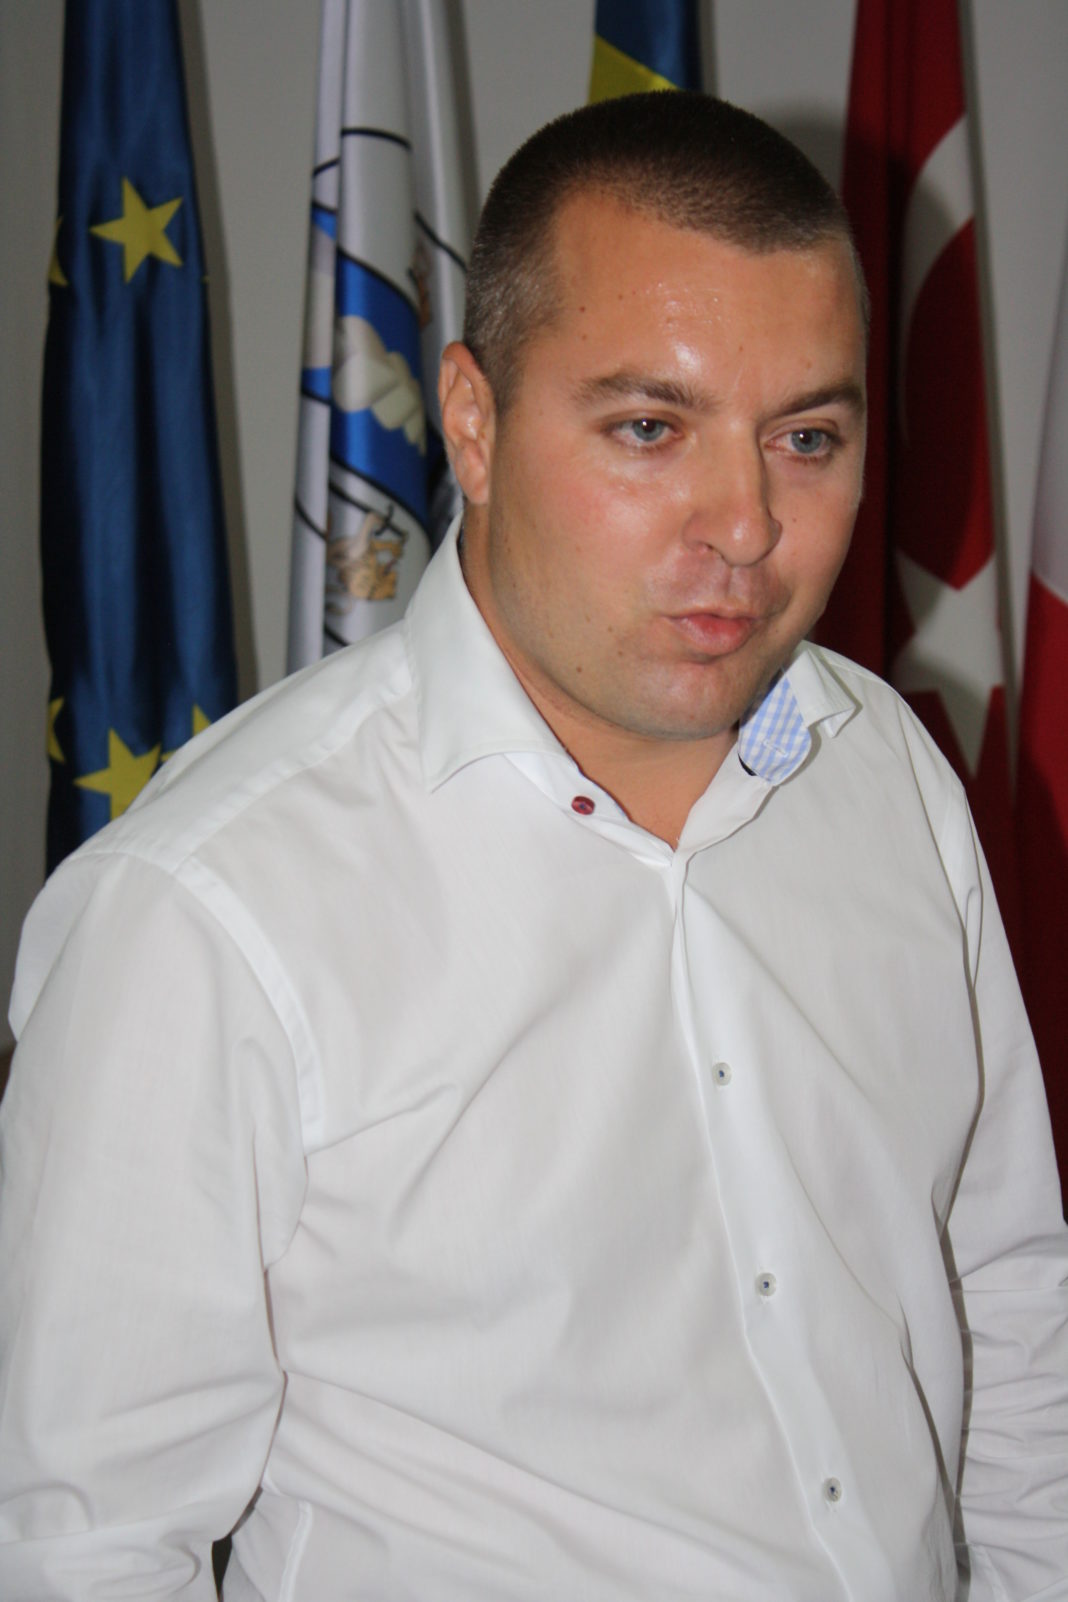 Mihai Paraschiv, directorul Transloc, are COVID-19